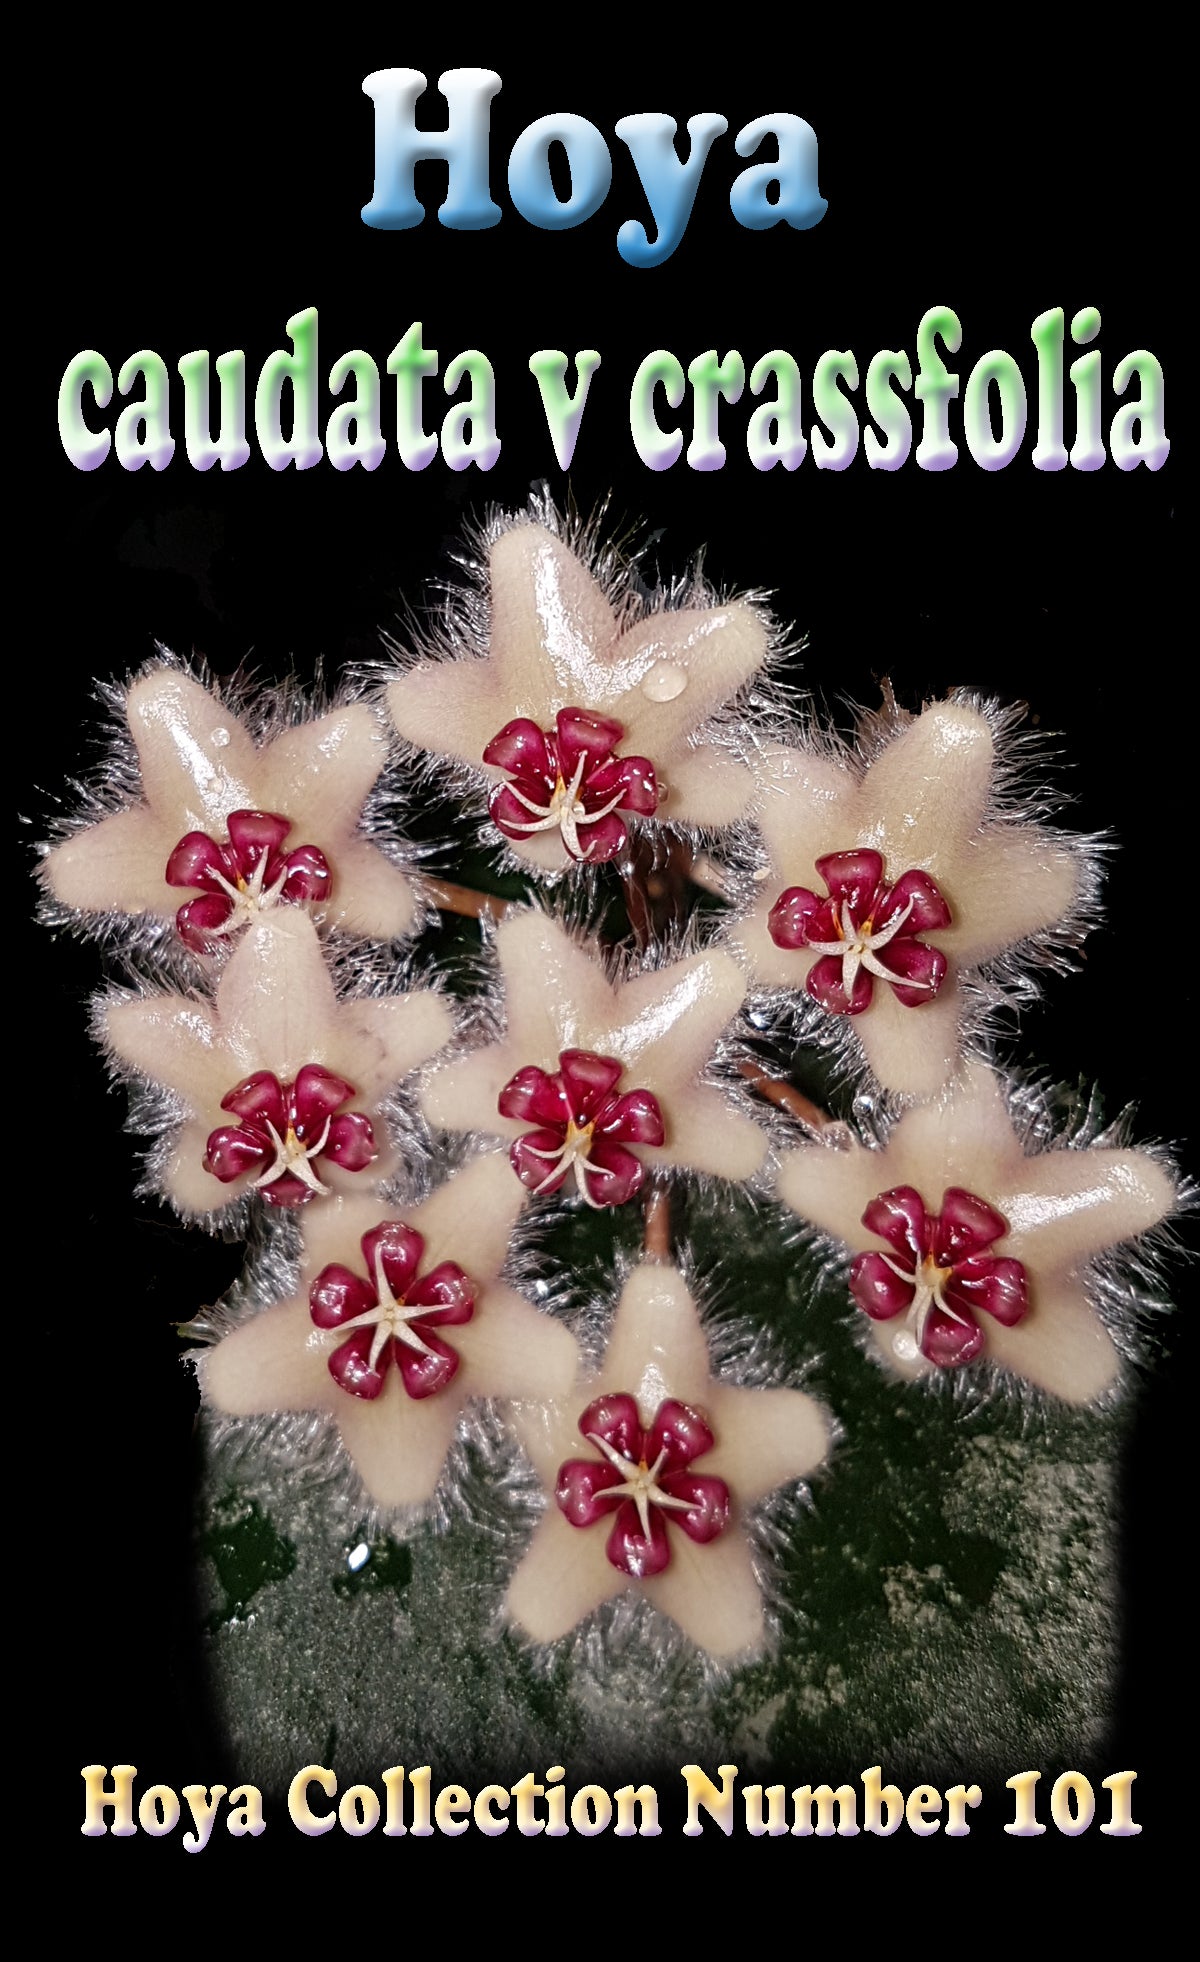 Hoya caudata 'Crassifolia' #101 100mm Pot